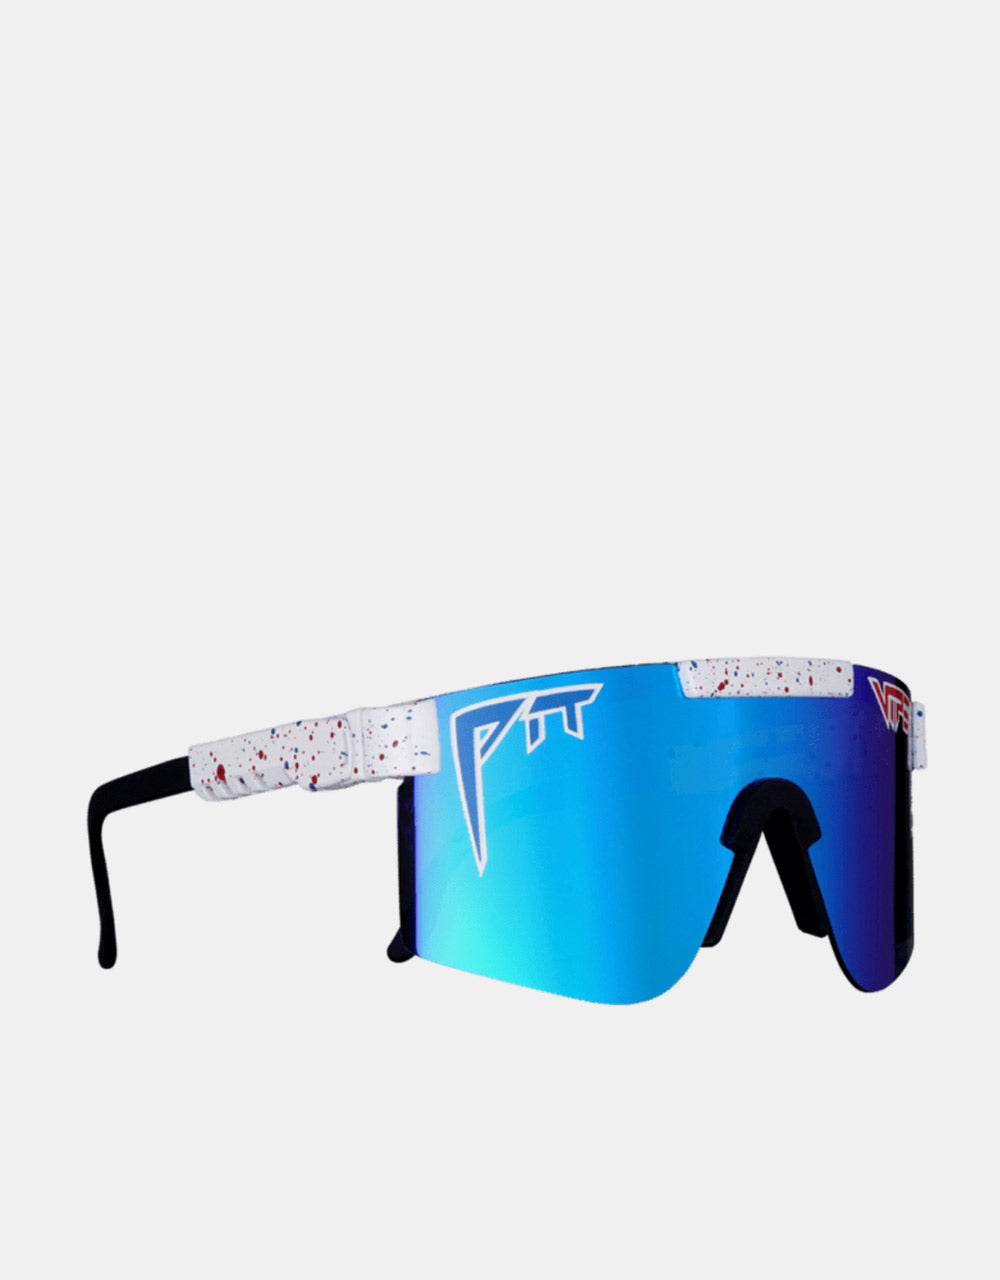 Pit Viper Absolute Freedom Double Wide Sunglasses - Blue Revo Mirror